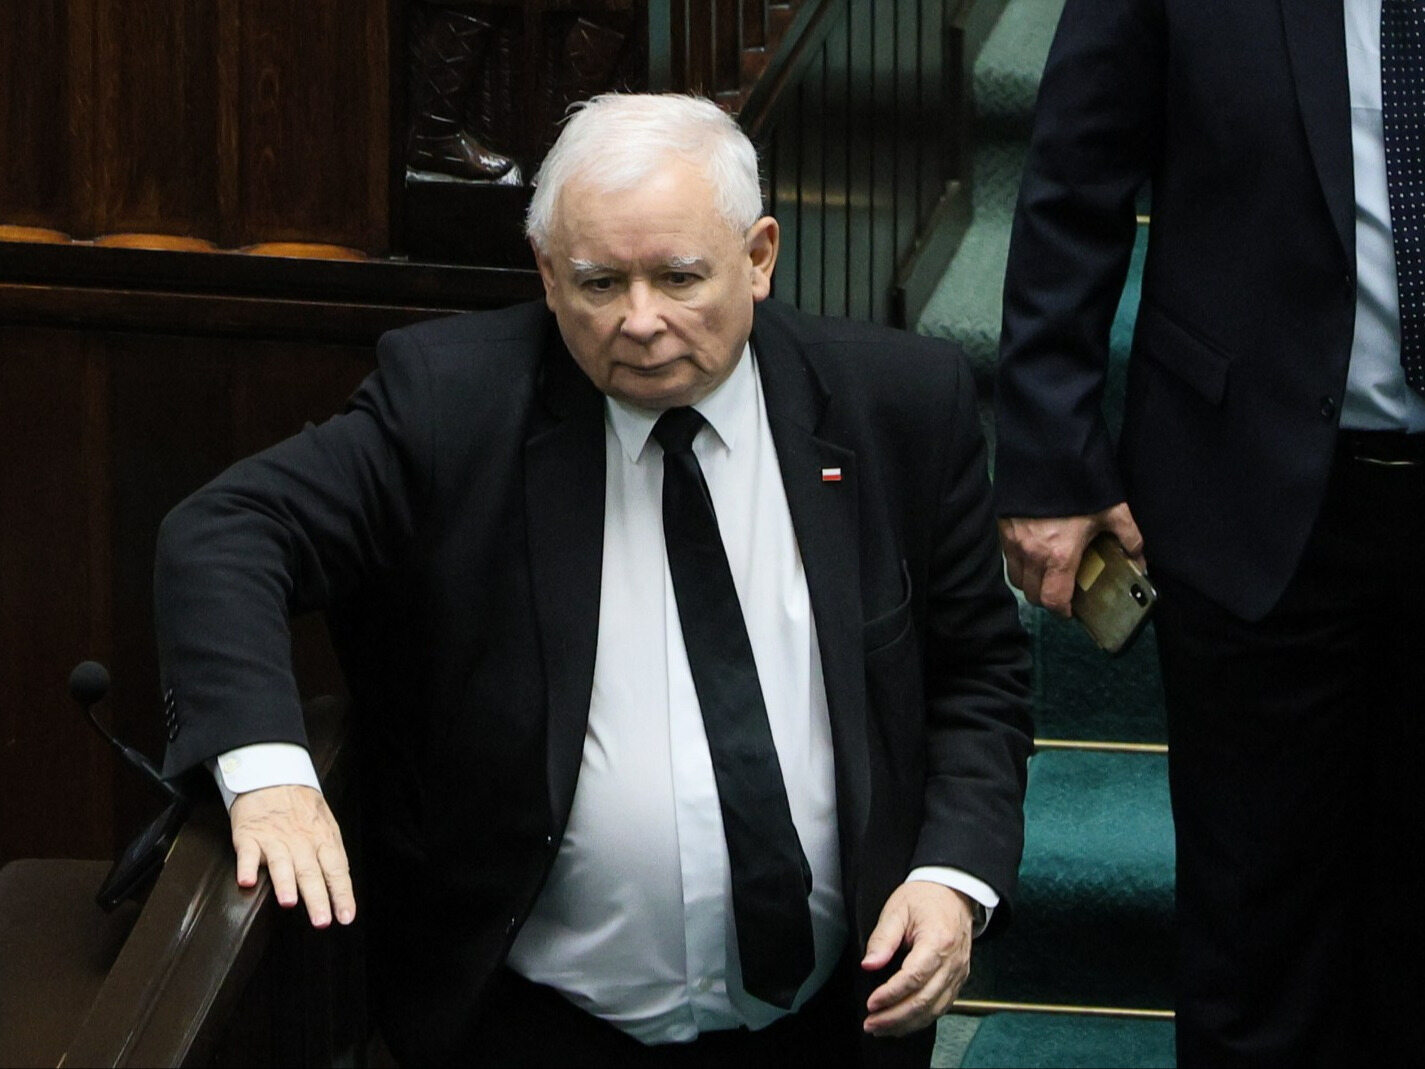 Kaczyński referred to Matecki's late-night prank.  "I didn't see things like that"